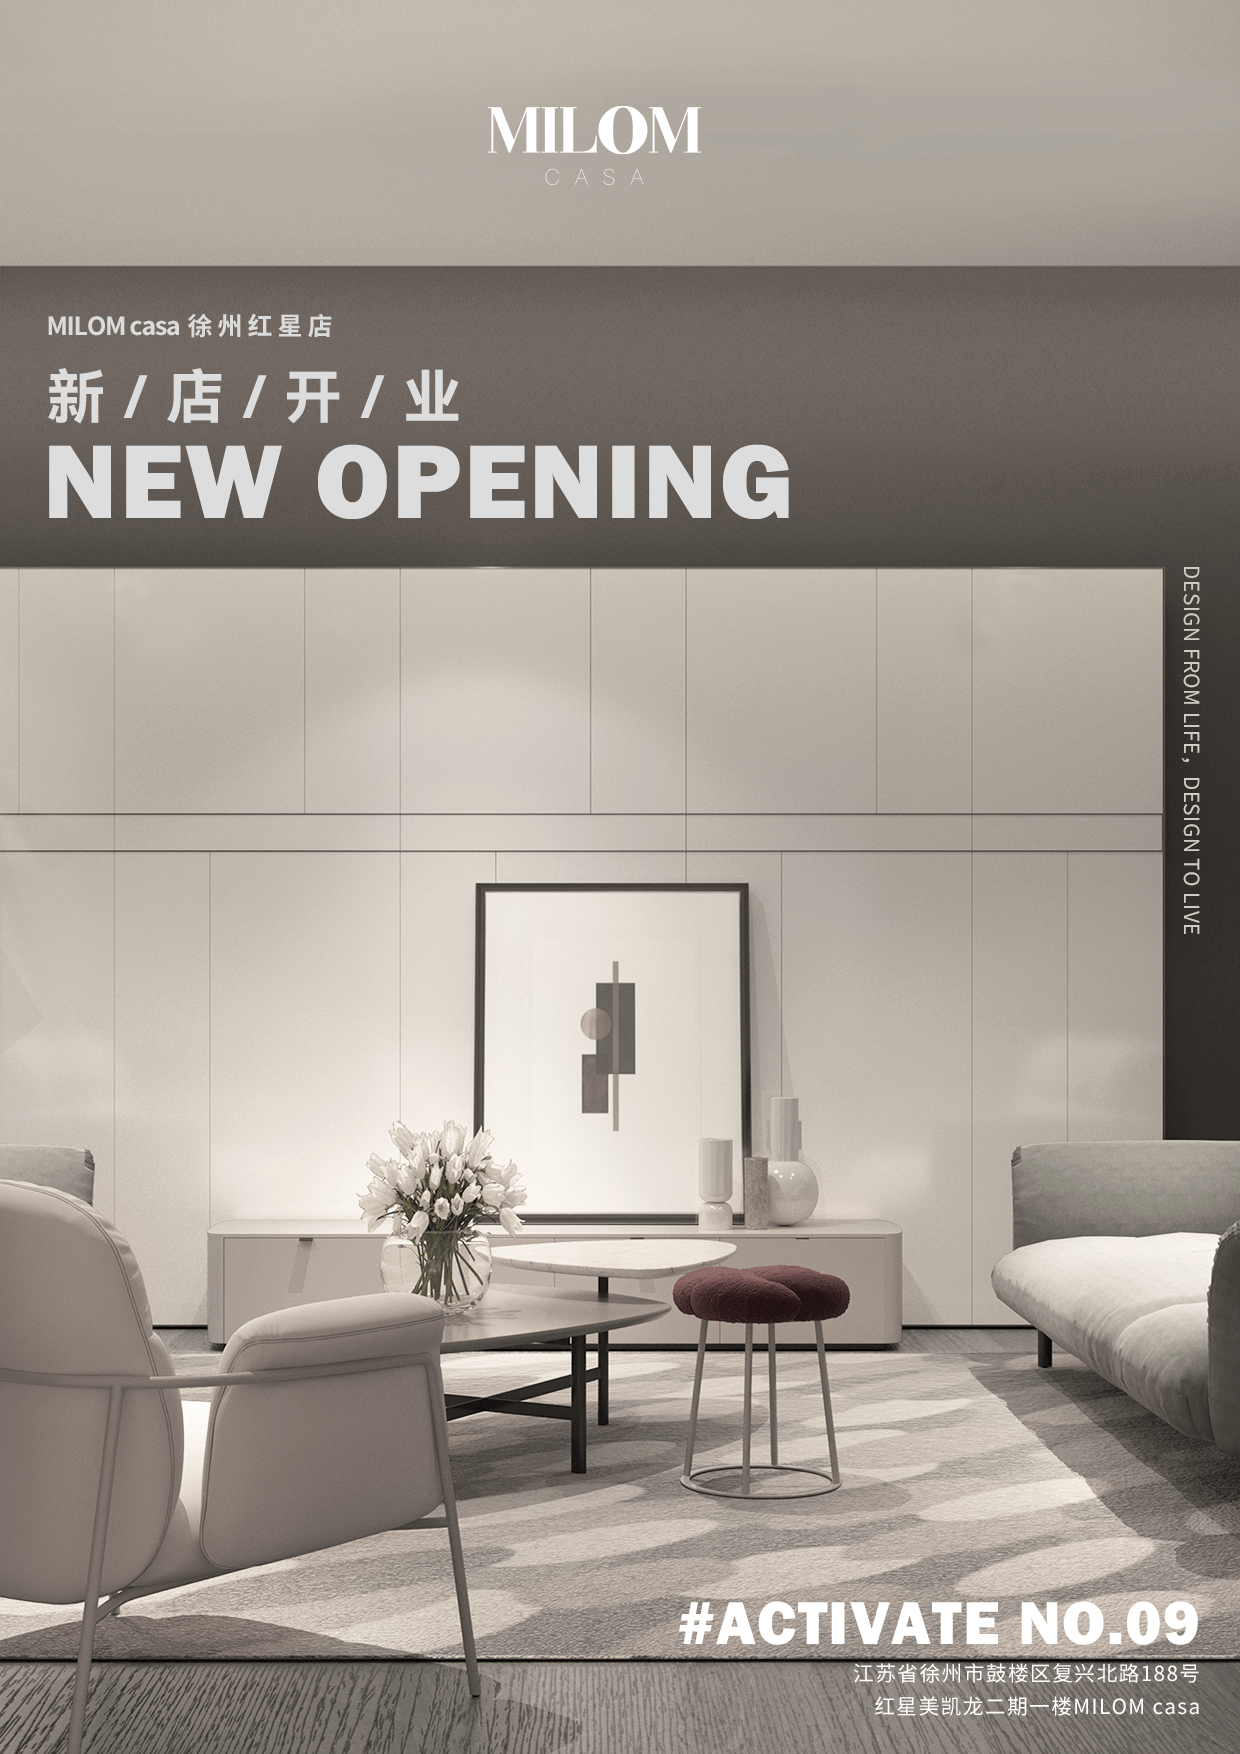 MILOM casa徐州新店，带来家居生活的品质升华 